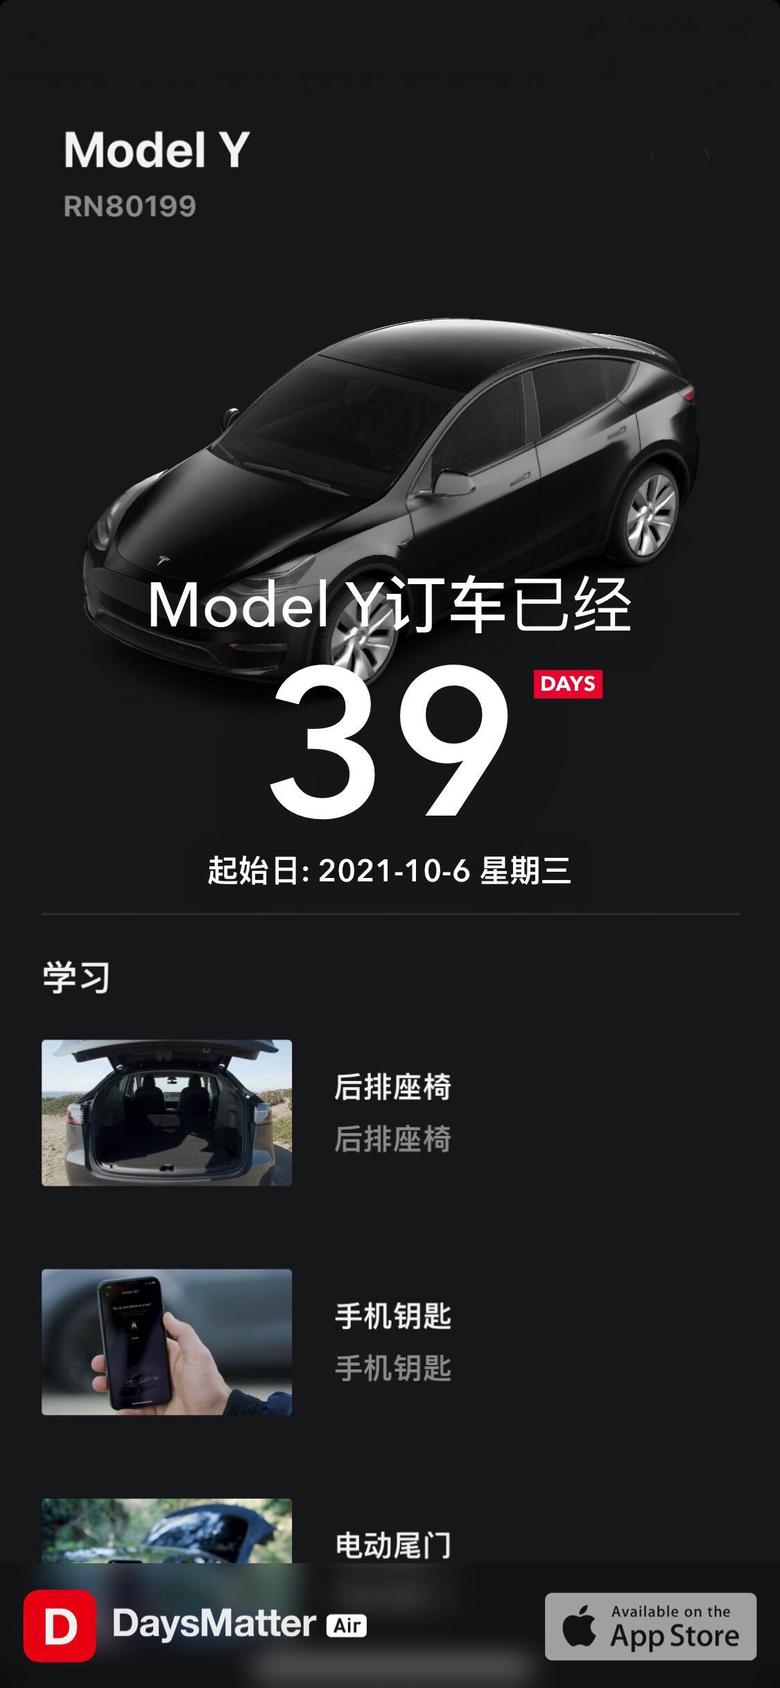 model y 坐标：南京单号：199分享一波双十一购买的配件，给大家参考一下！大聪明别来！！！